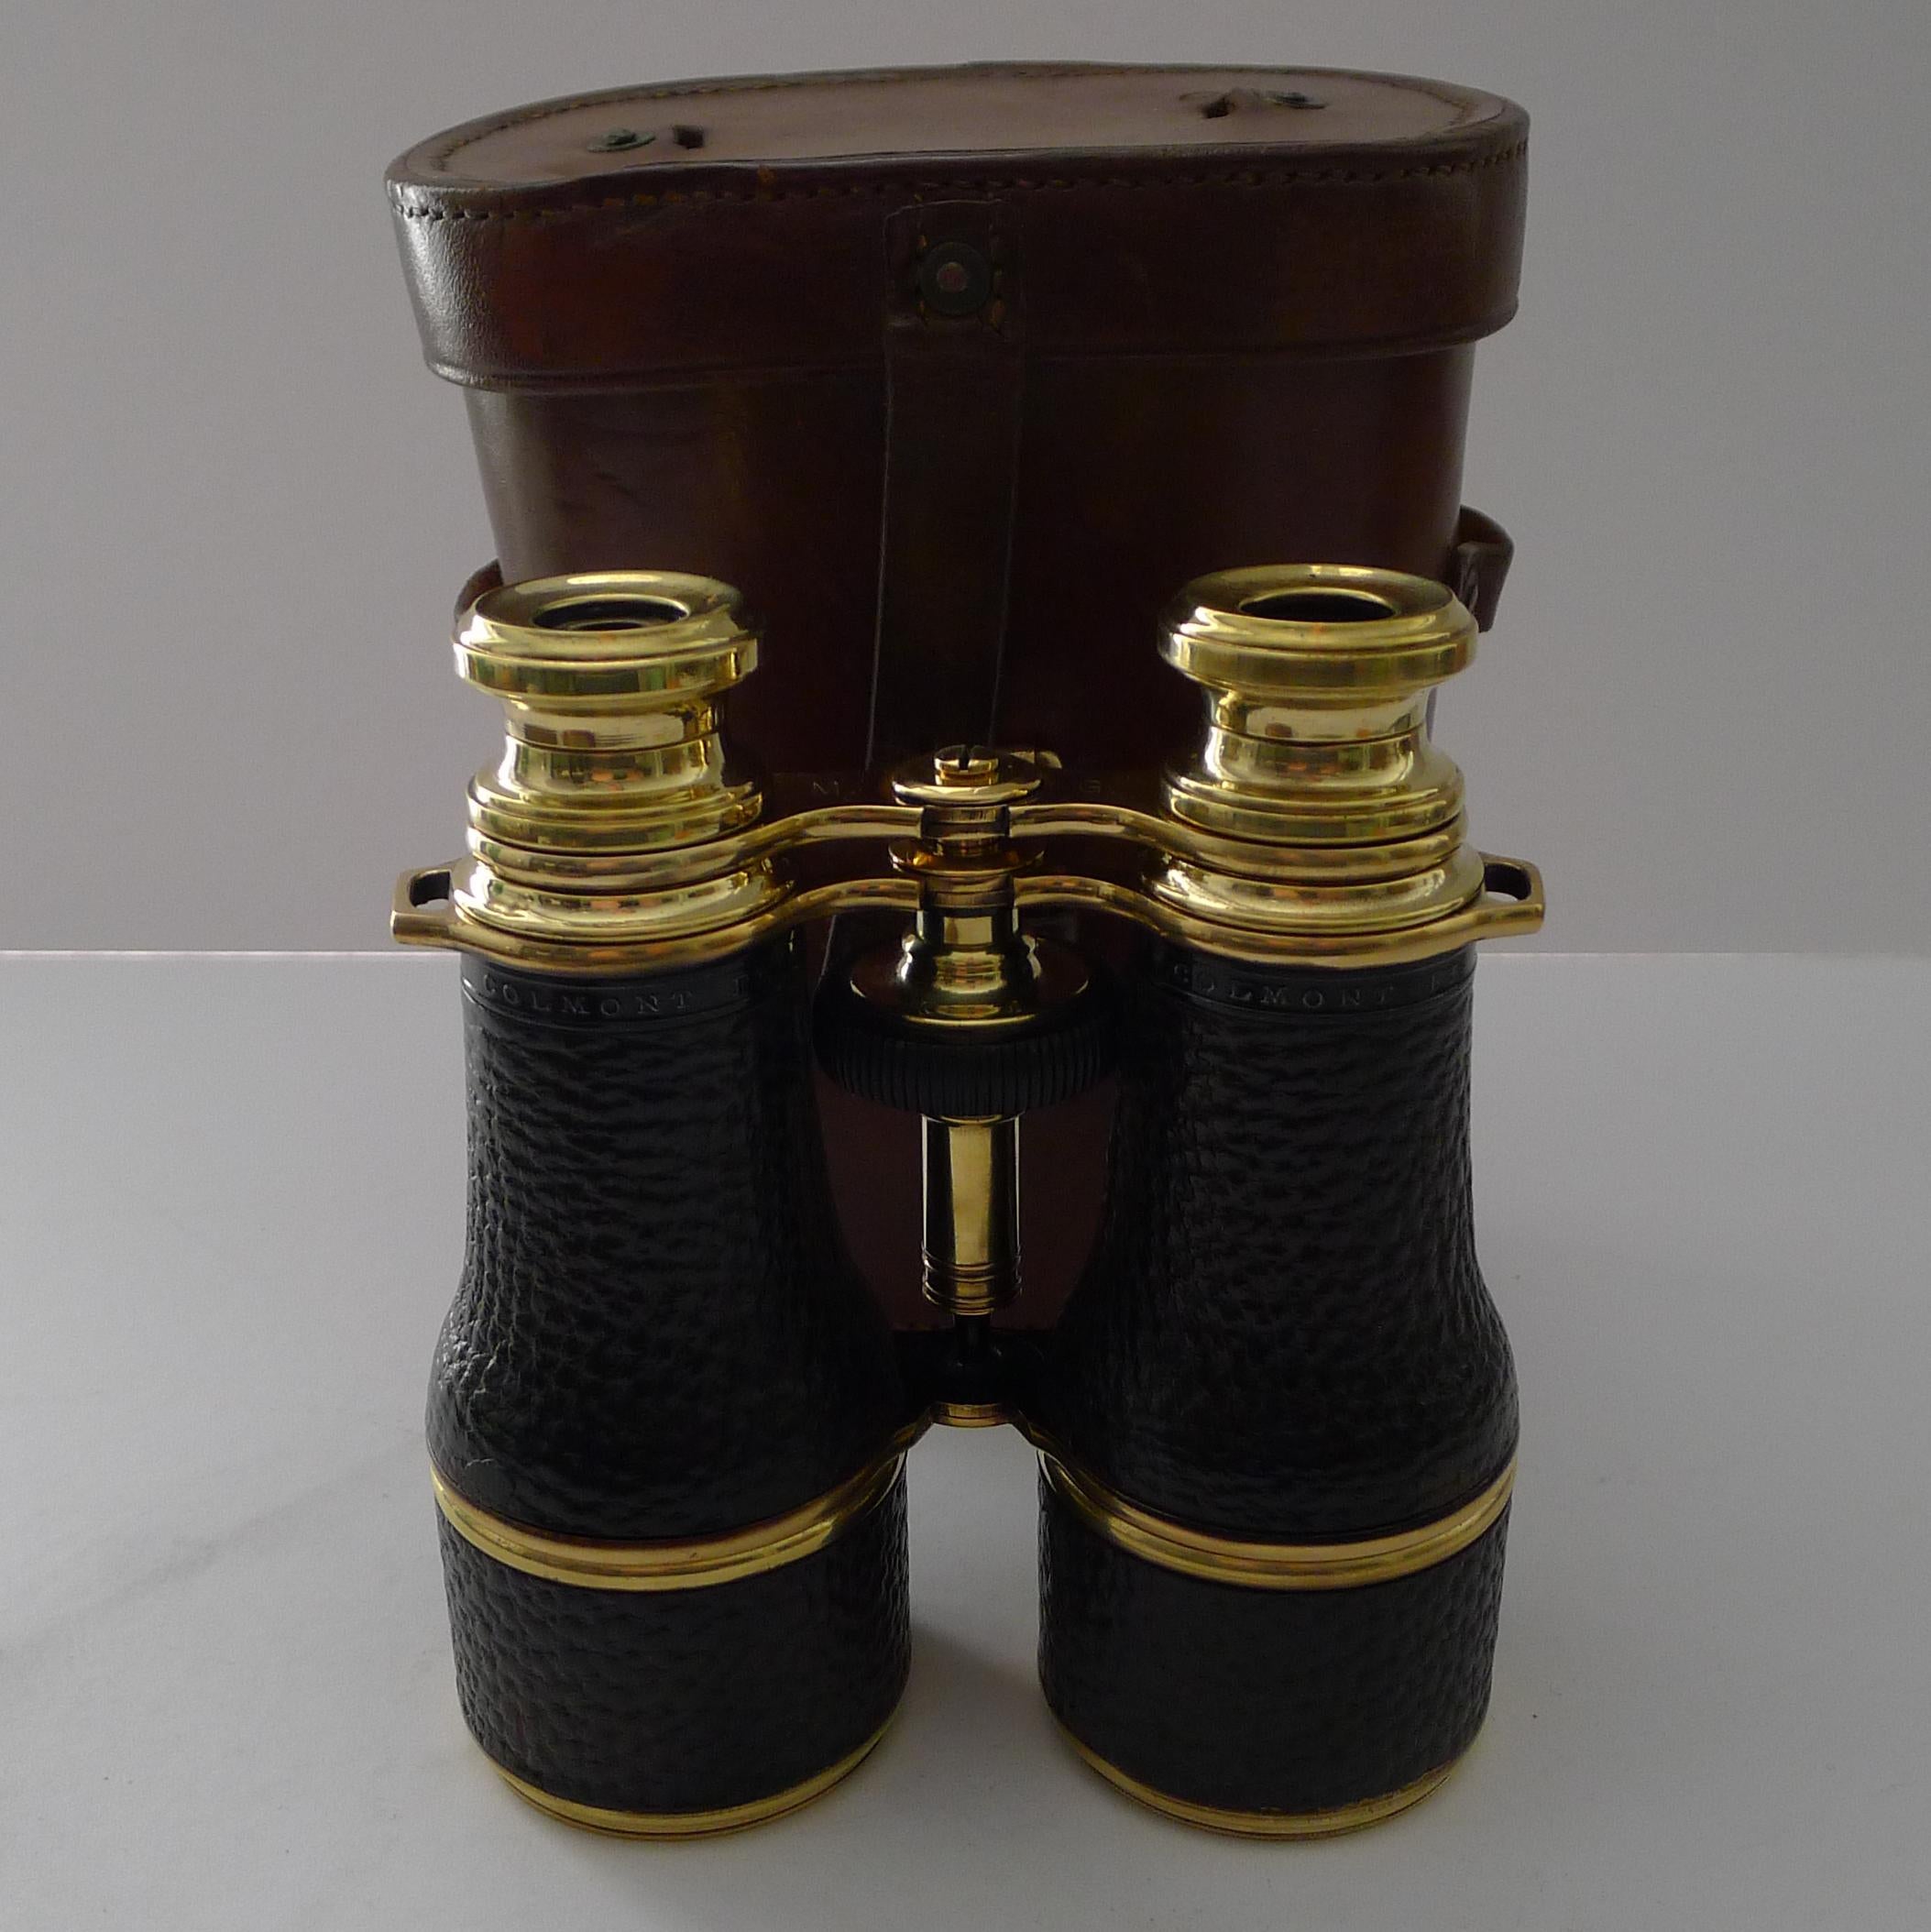 Brass French Made WW1 Binoculars for British Military Issue, c.1917